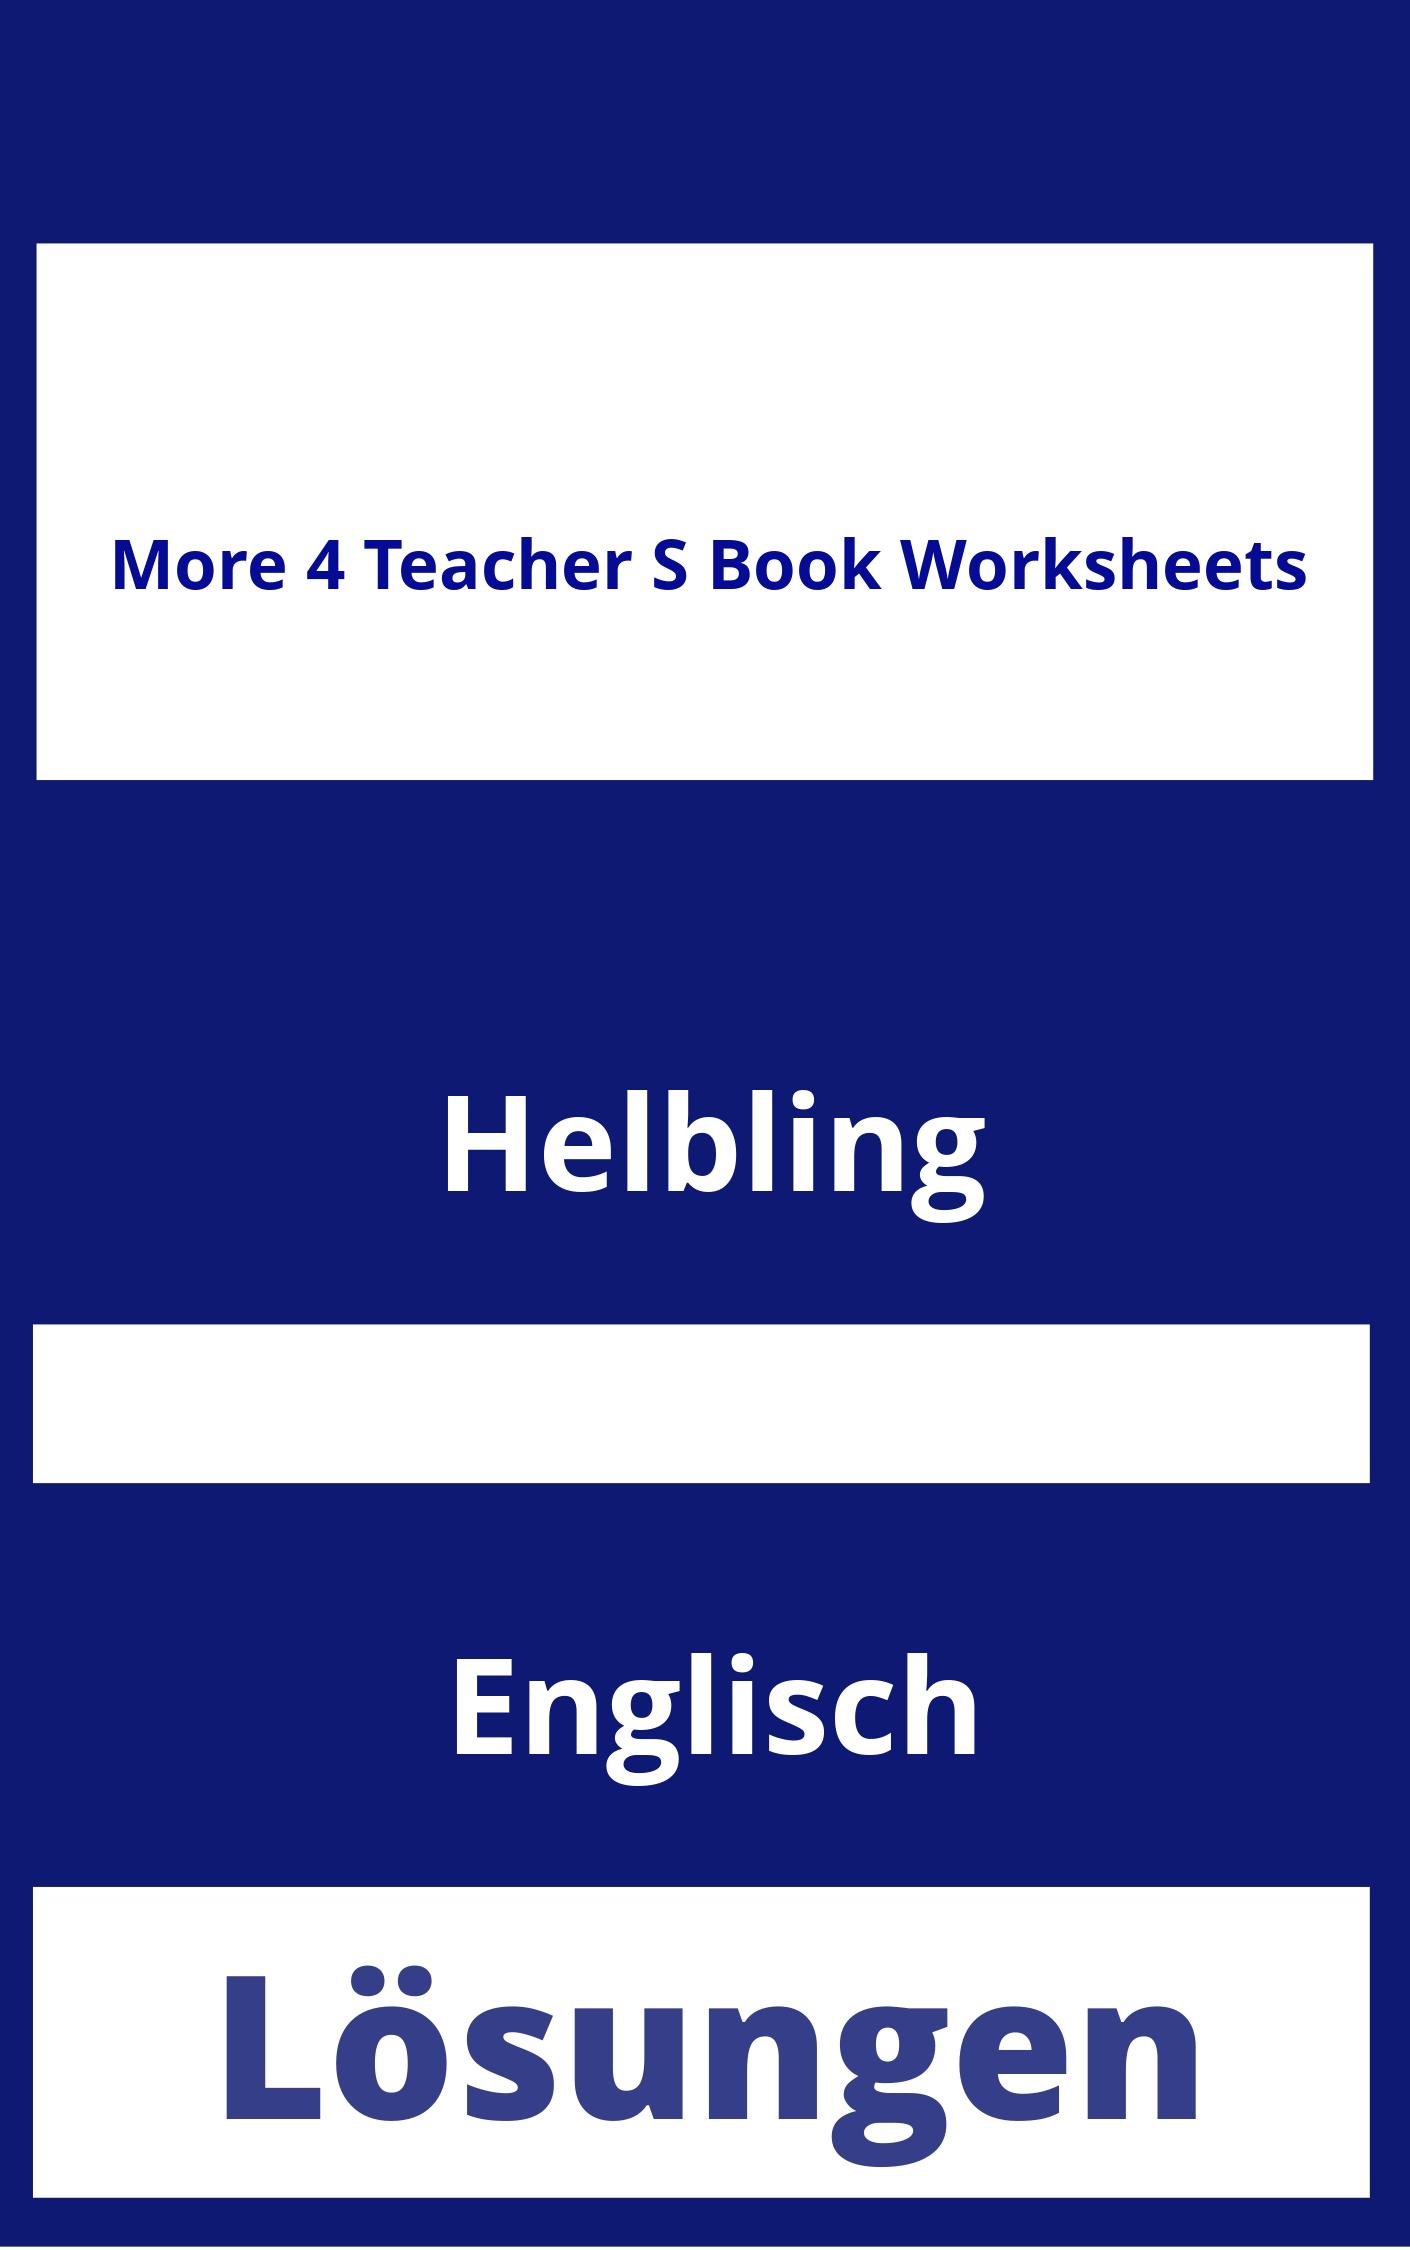 More 4 Teacher's book Worksheets